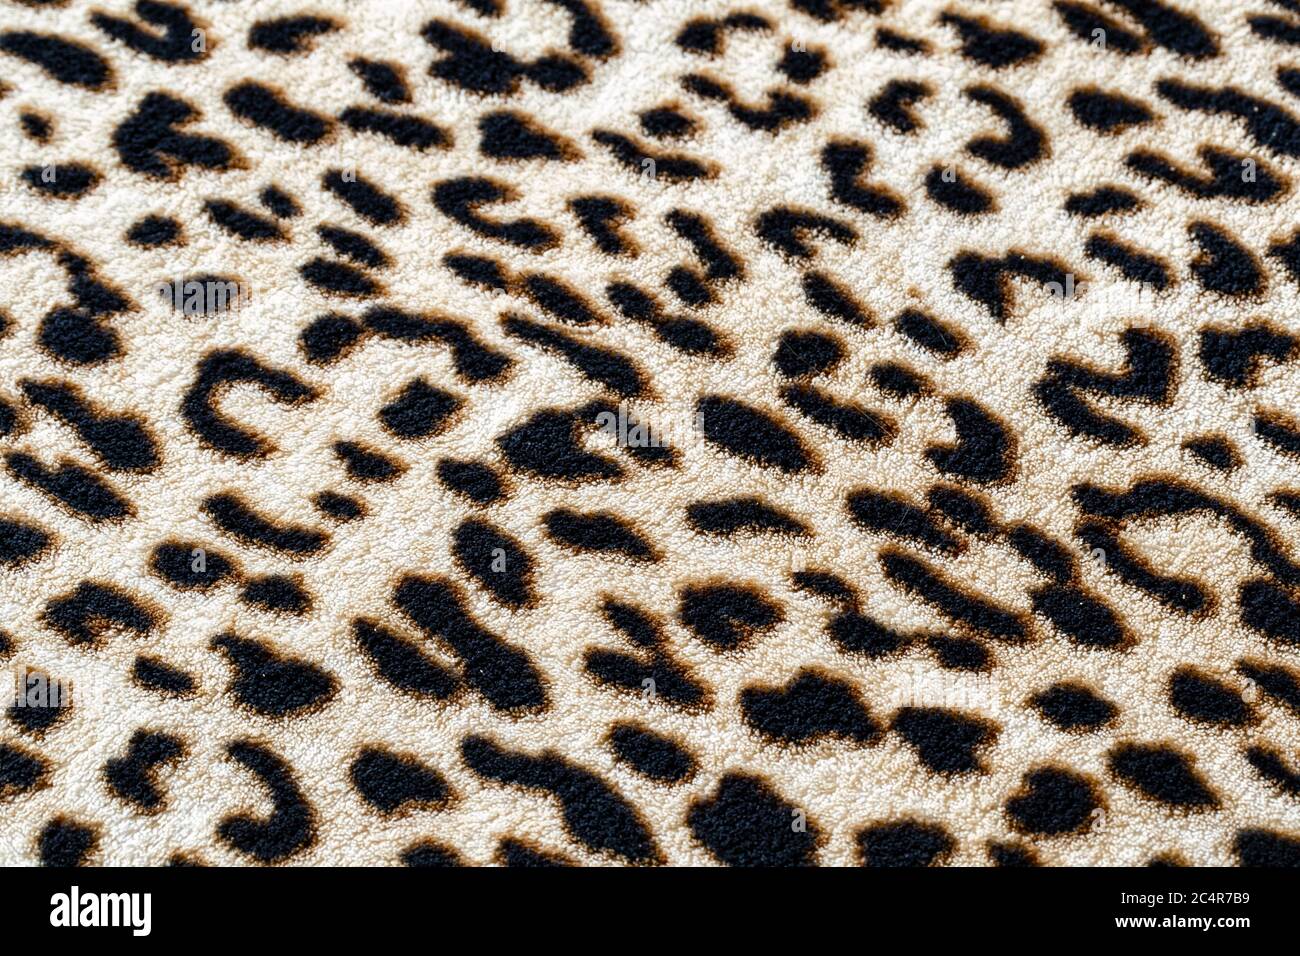 Wild animal cheetah print pattern Stock Photo - Alamy